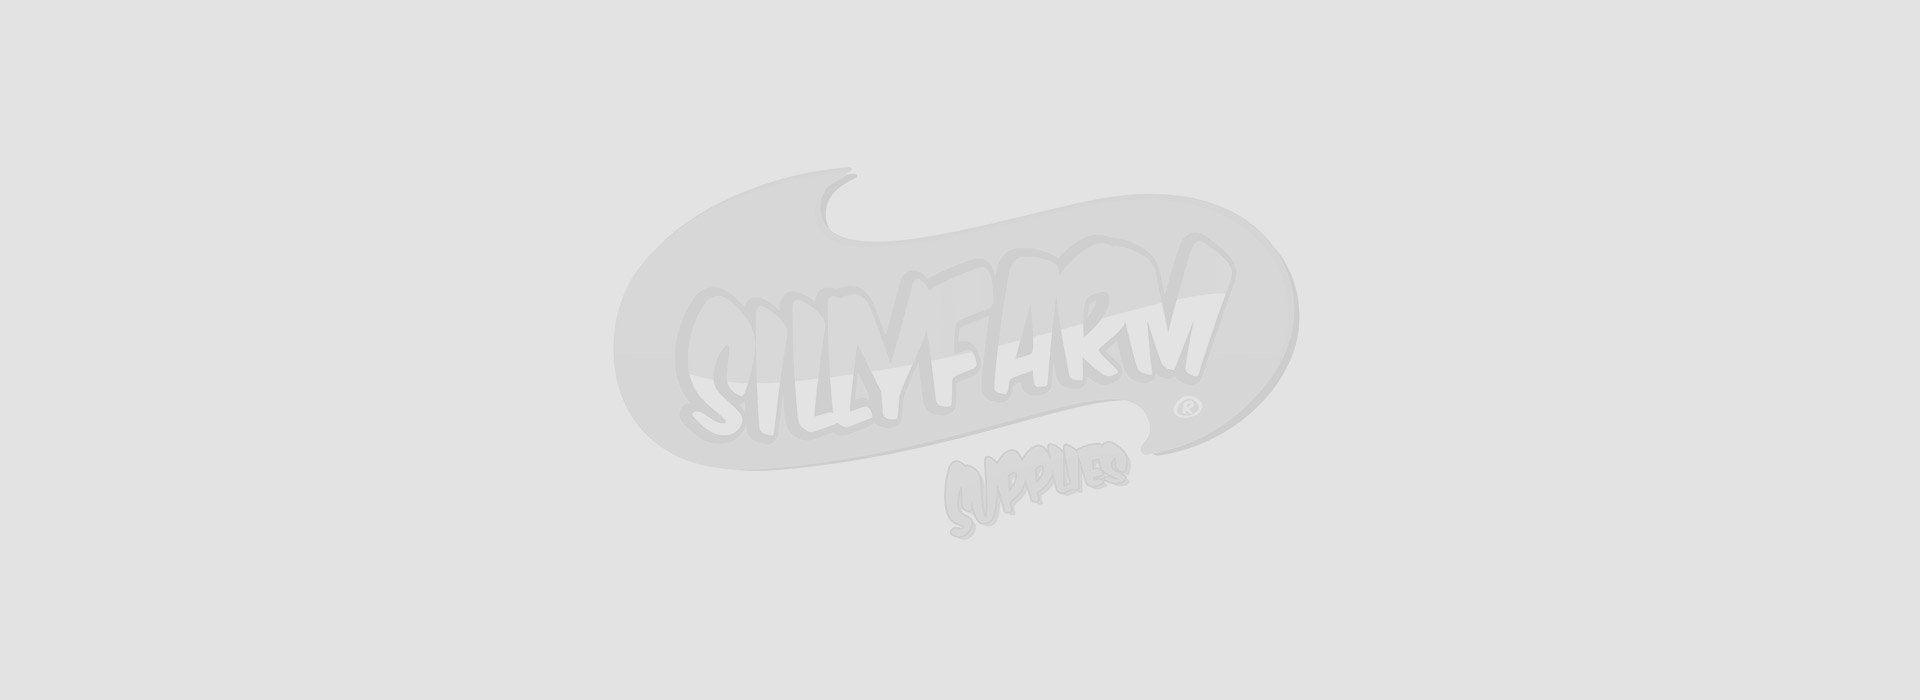 Alcone Co. | Silly Farm Supplies